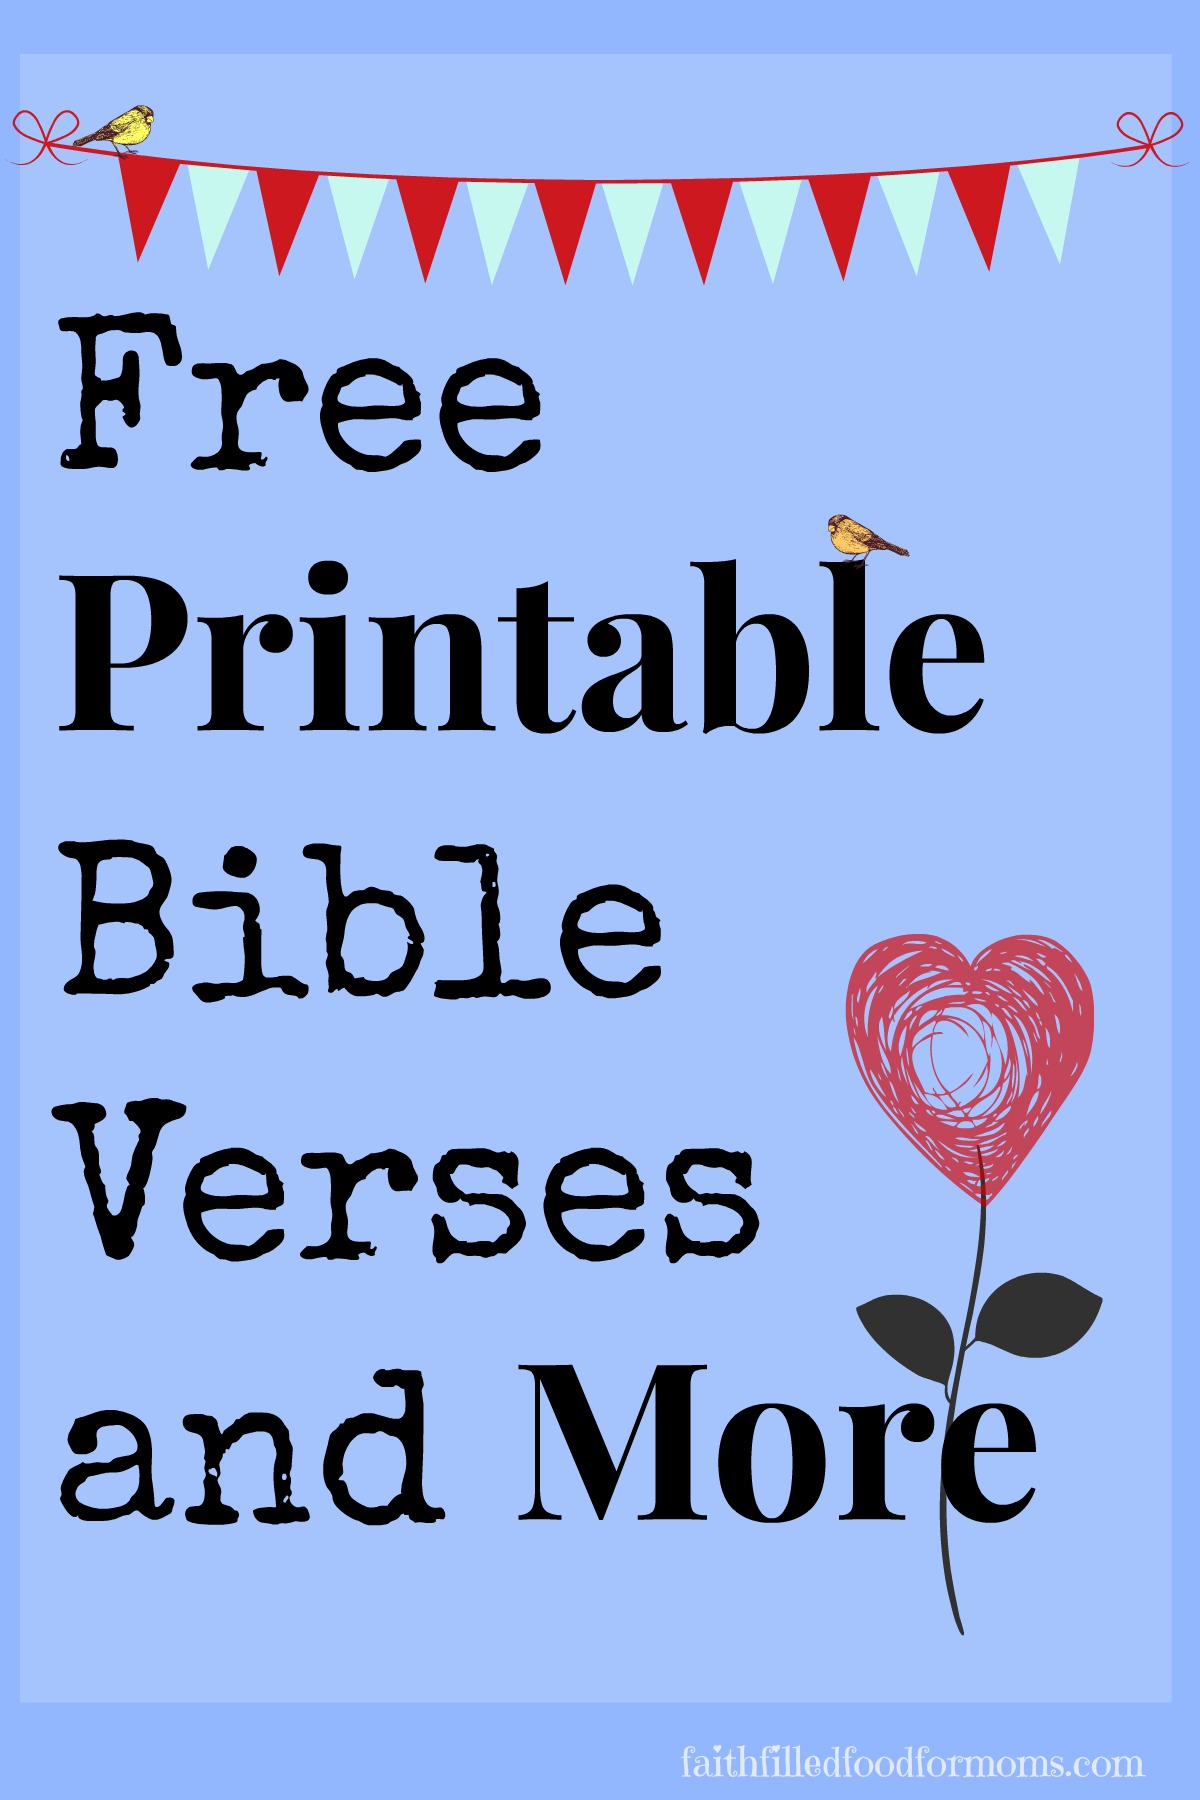 Printable Scripture Bible Verses • Faith Filled Food For Moms - Free Printable Bible Verses For Children